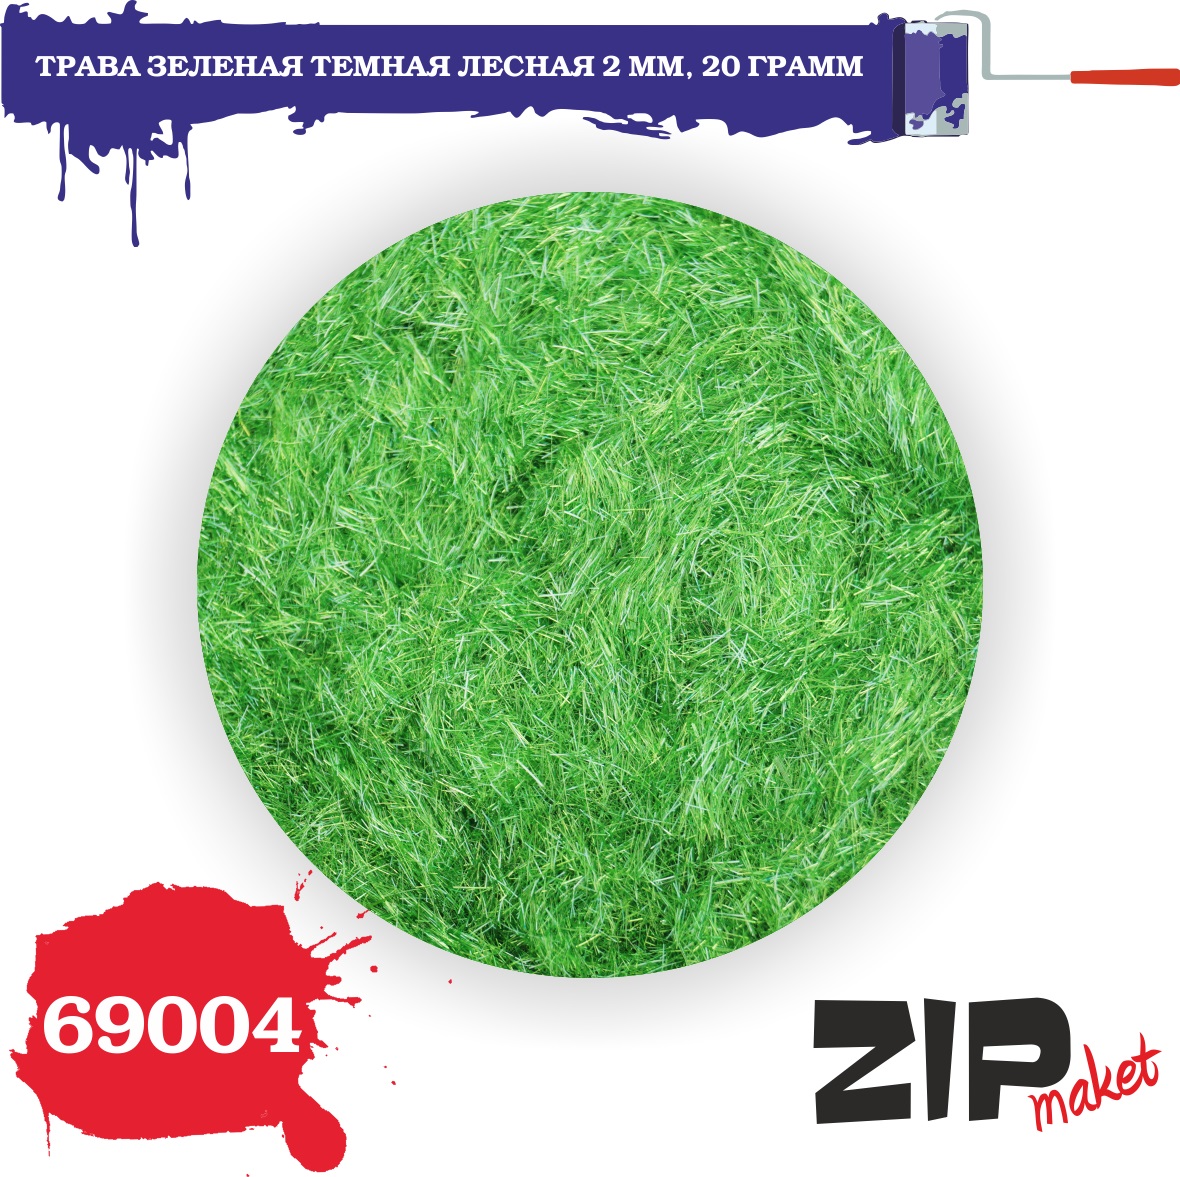 69004  материалы для диорам  Трава зеленая темная лесная 2 мм, 20гр